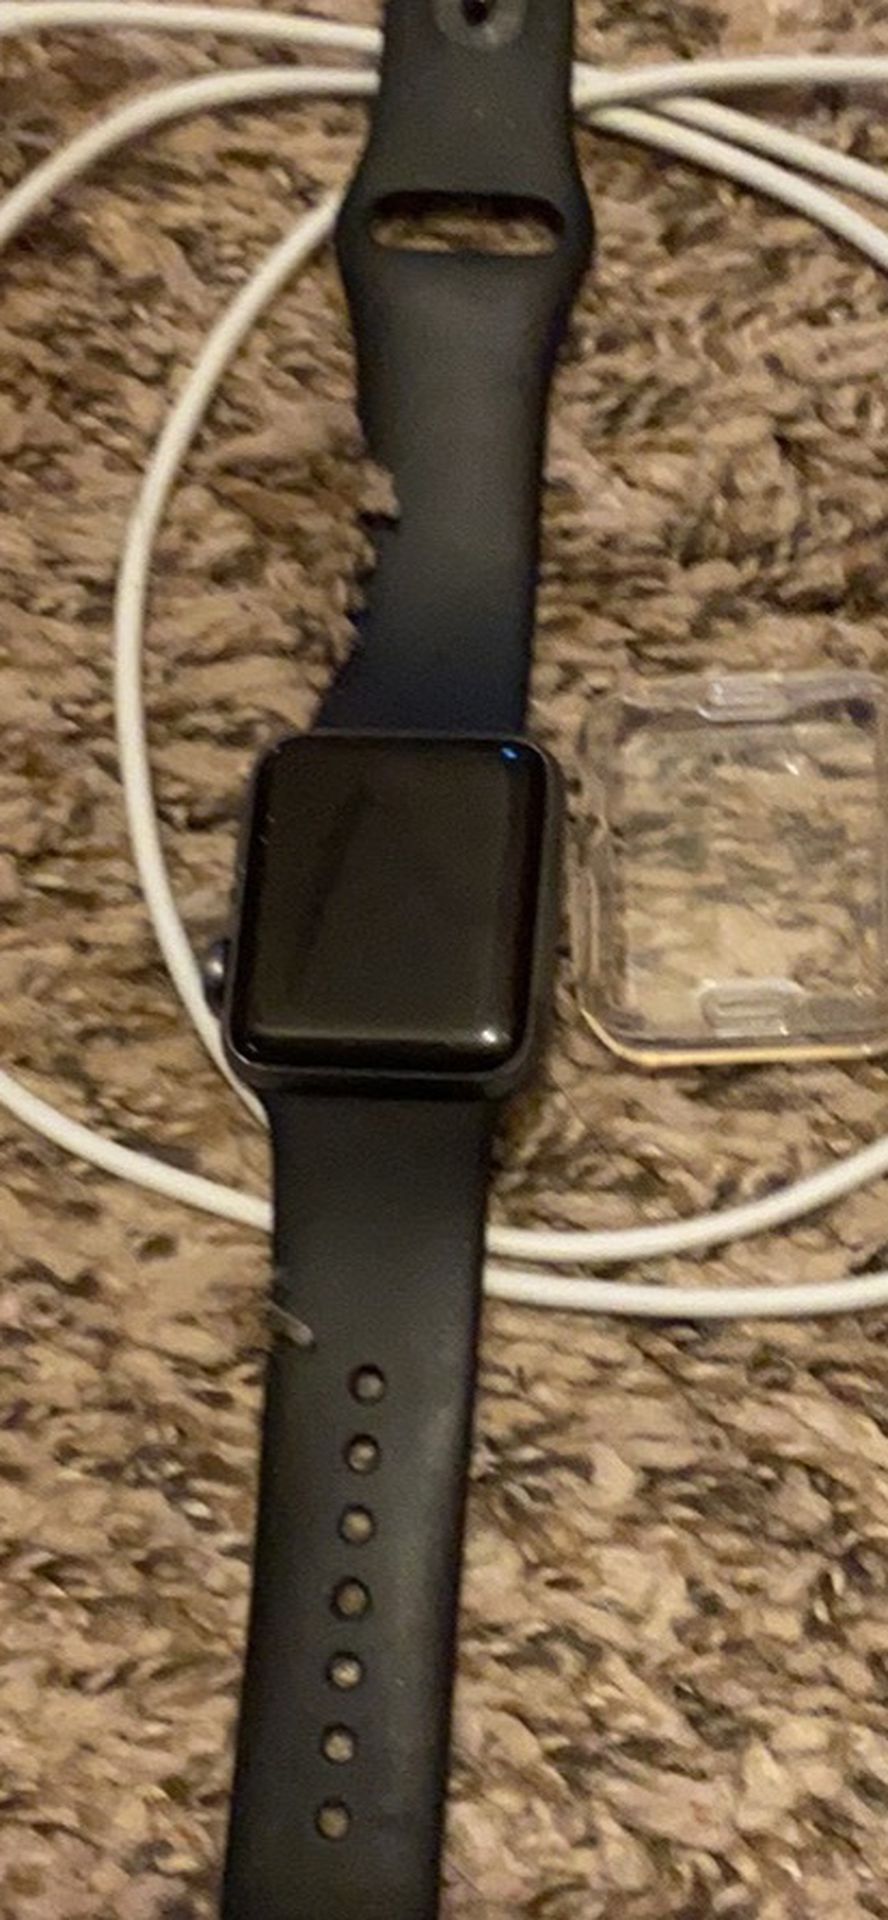 Apple Watch Series 3 38MM